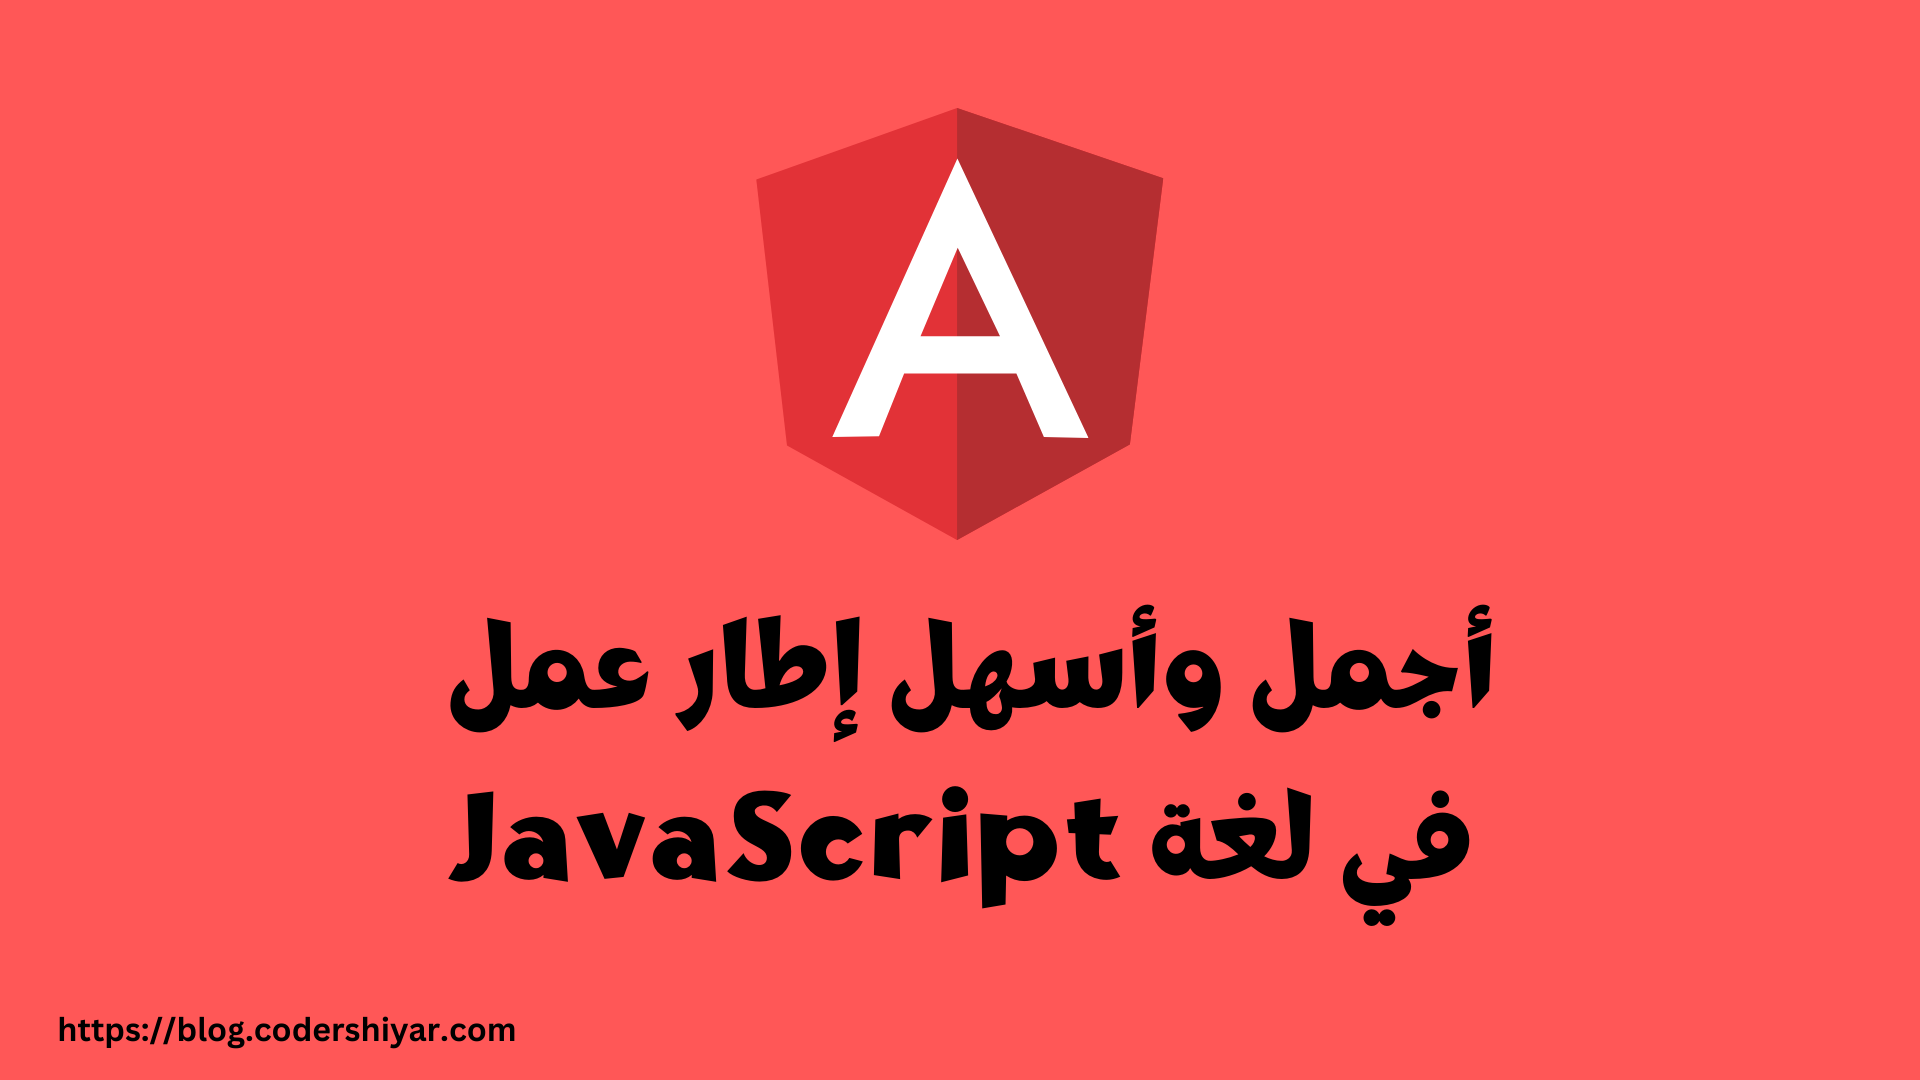 AngularJS in Arabic